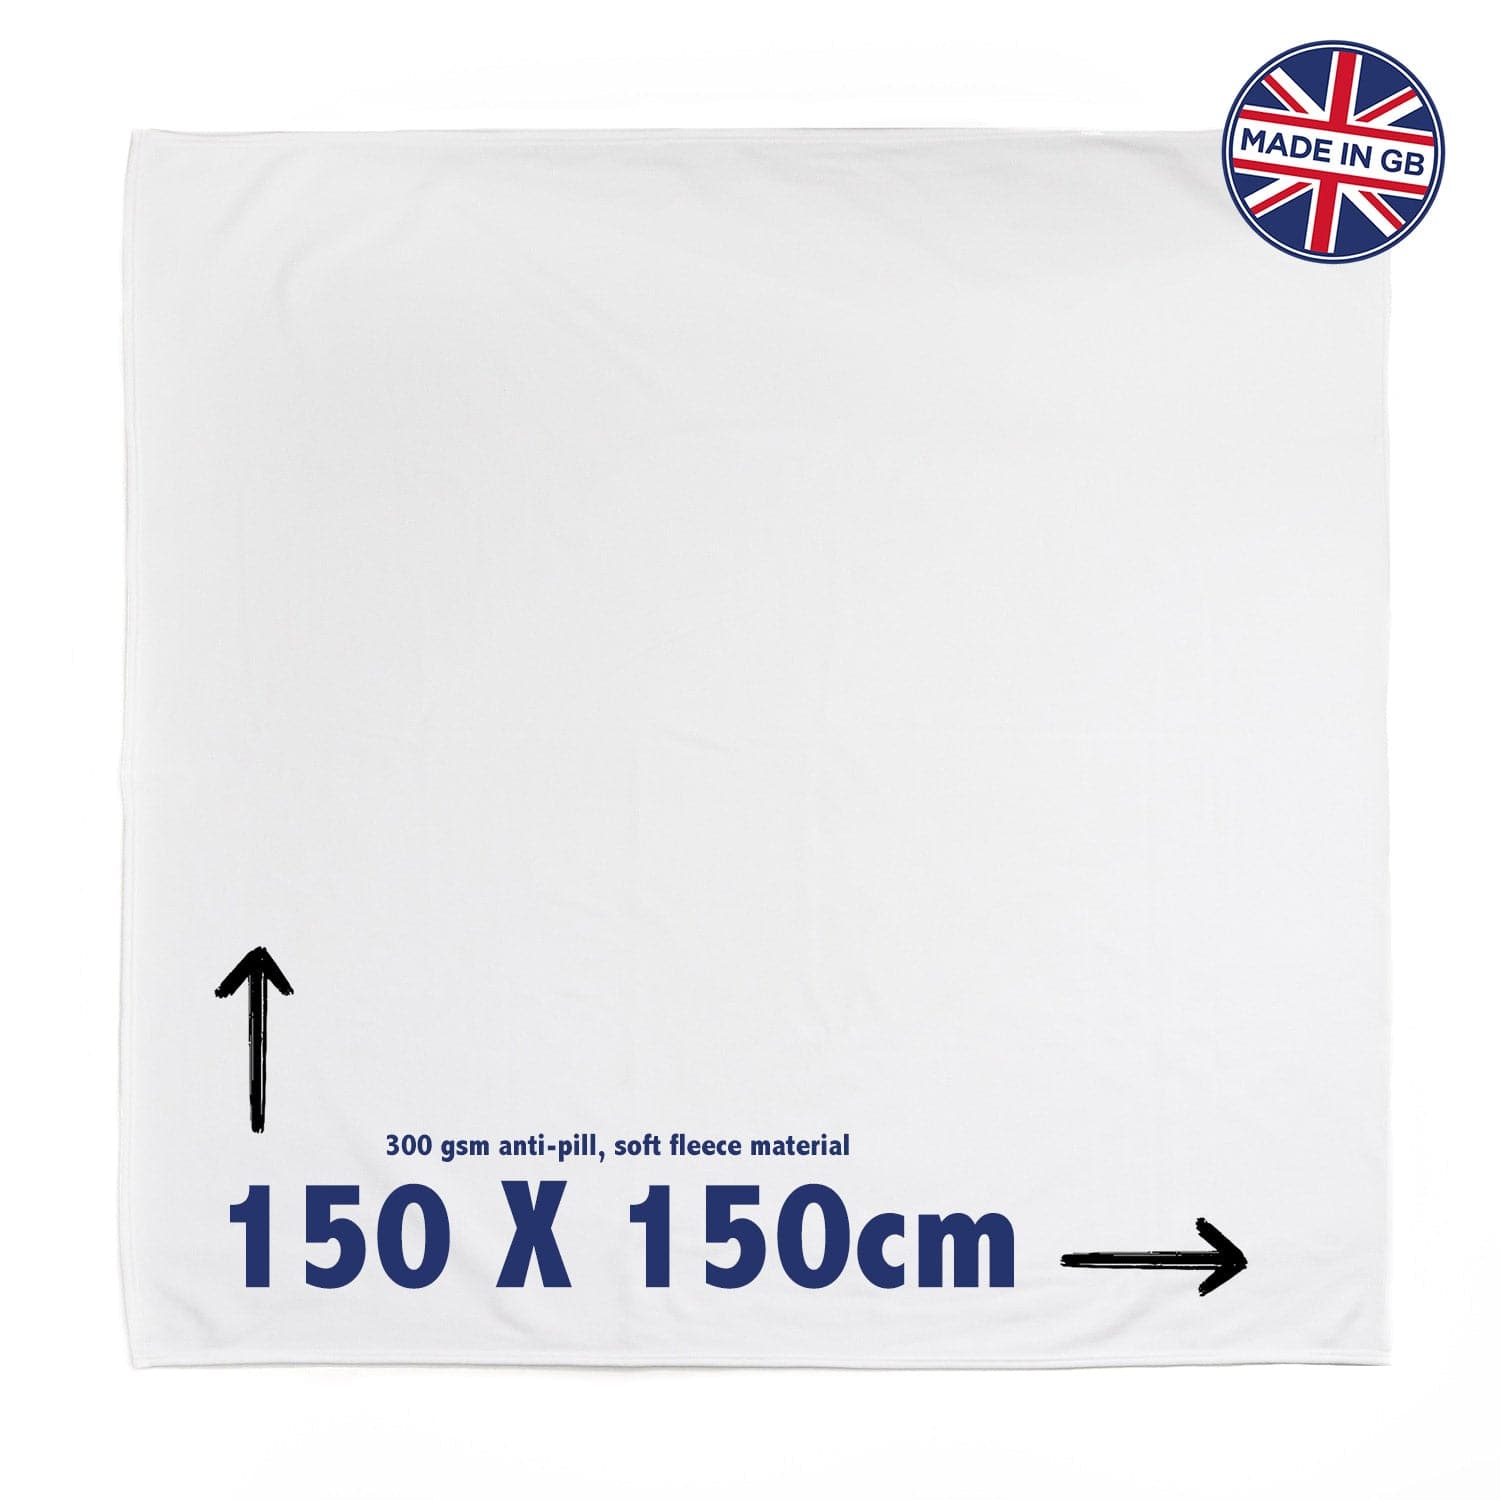 King Charles Coronation - Union Jack - Official Royal Badge - 150 x 150cm Fleece Blanket